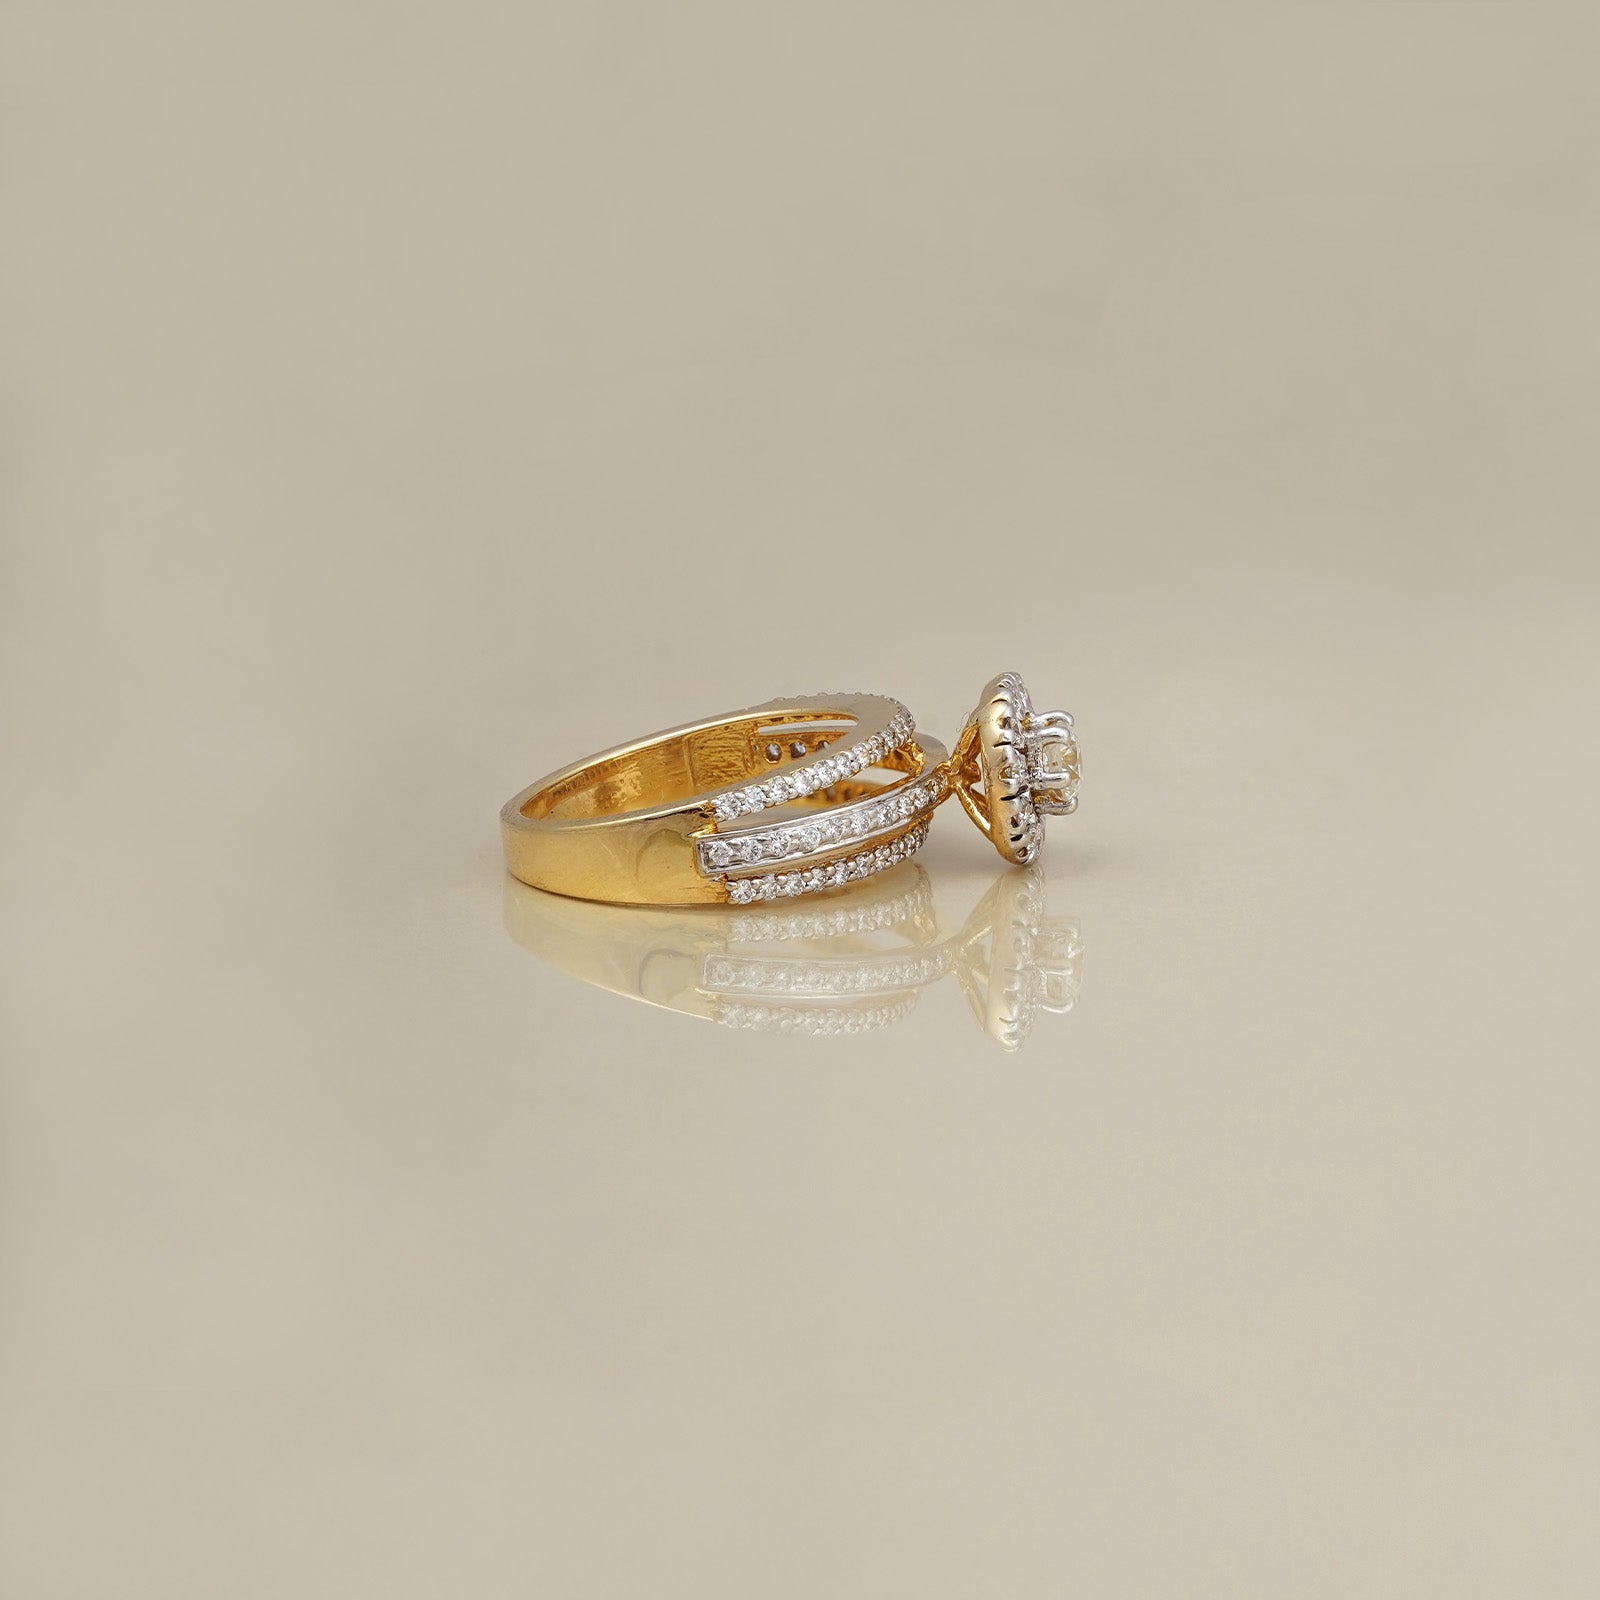 Buy Gold Stainless Steel 2.5mm Hammered Wedding Band Online | INOX Jewelry  India - Inox Jewelry India